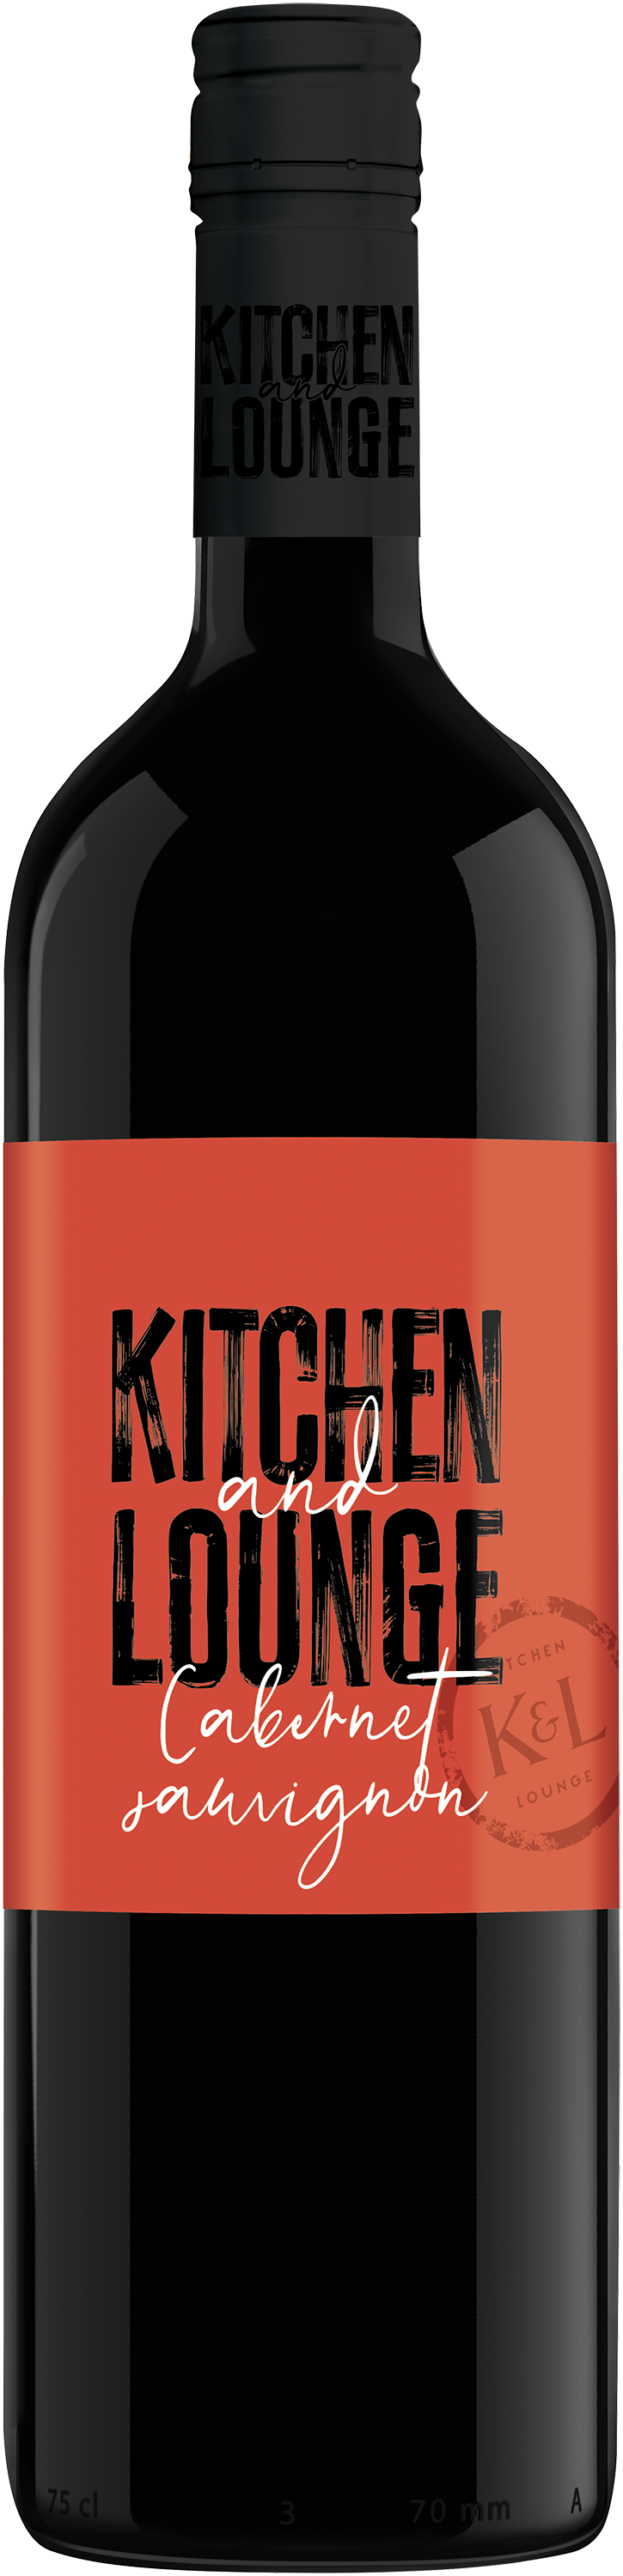 Kitchen and Lounge Cabernet Sauvignon